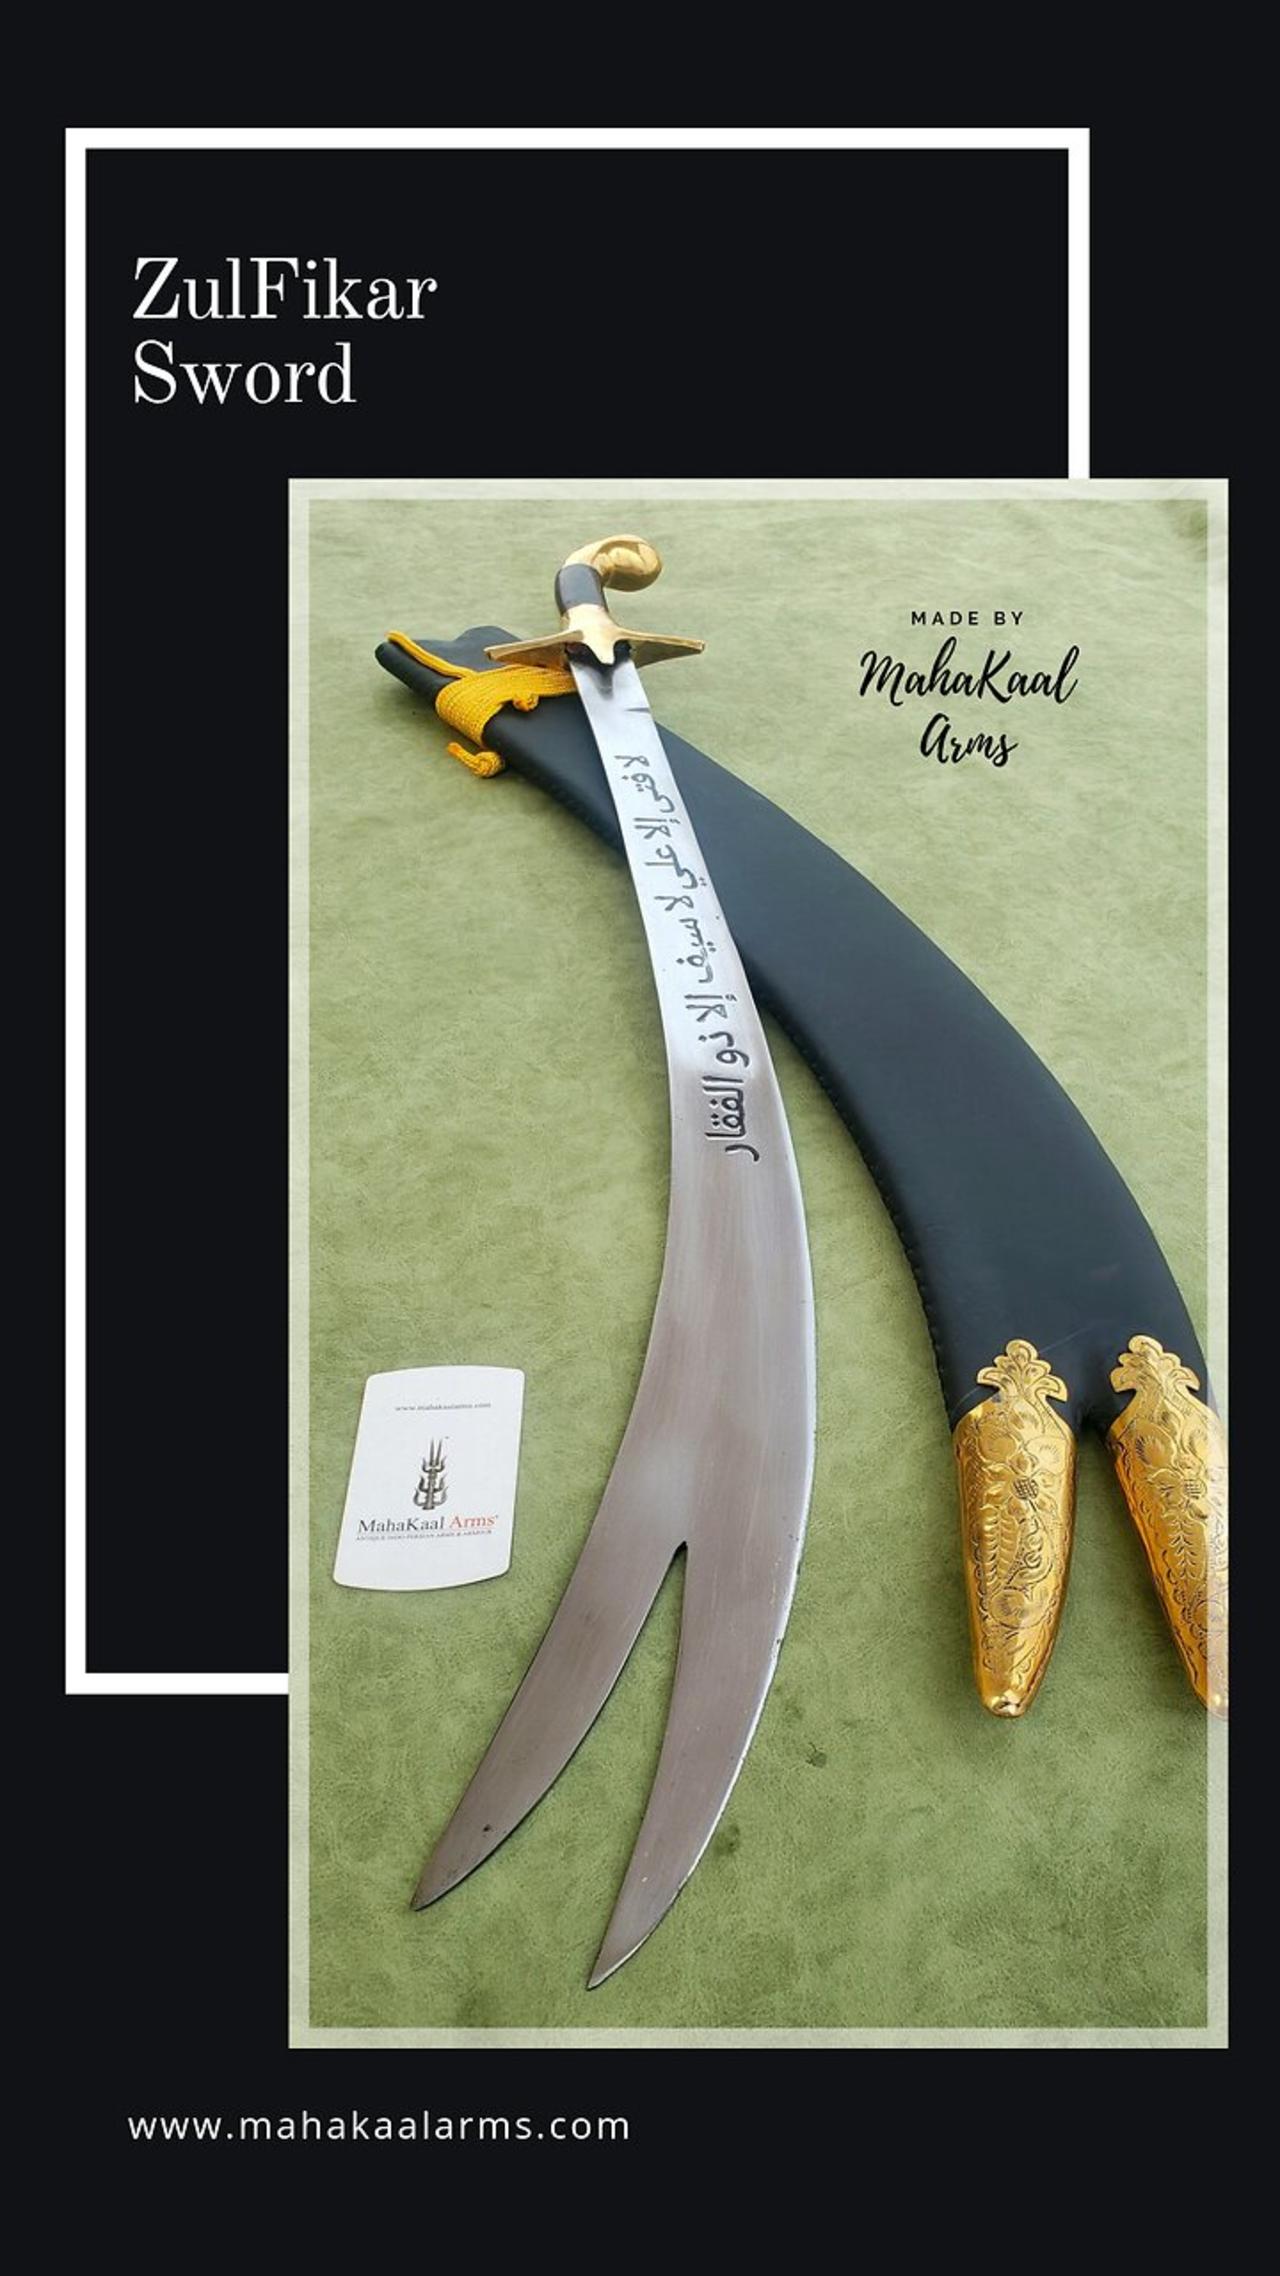 ZulFikar Sword